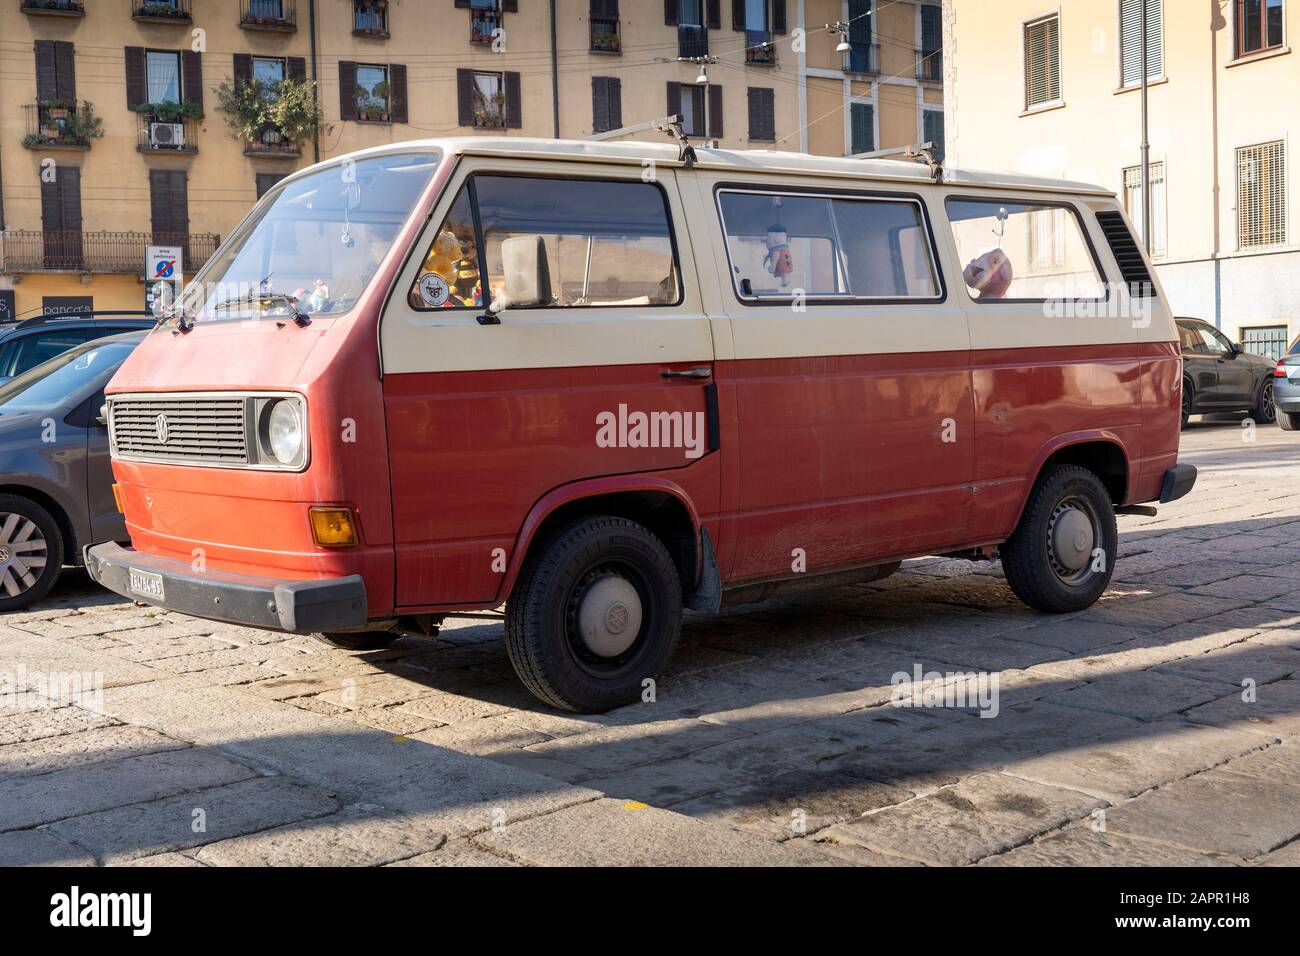 Red and white vintage Volkswagen camper van. VW transporter microbus. Stock Photo